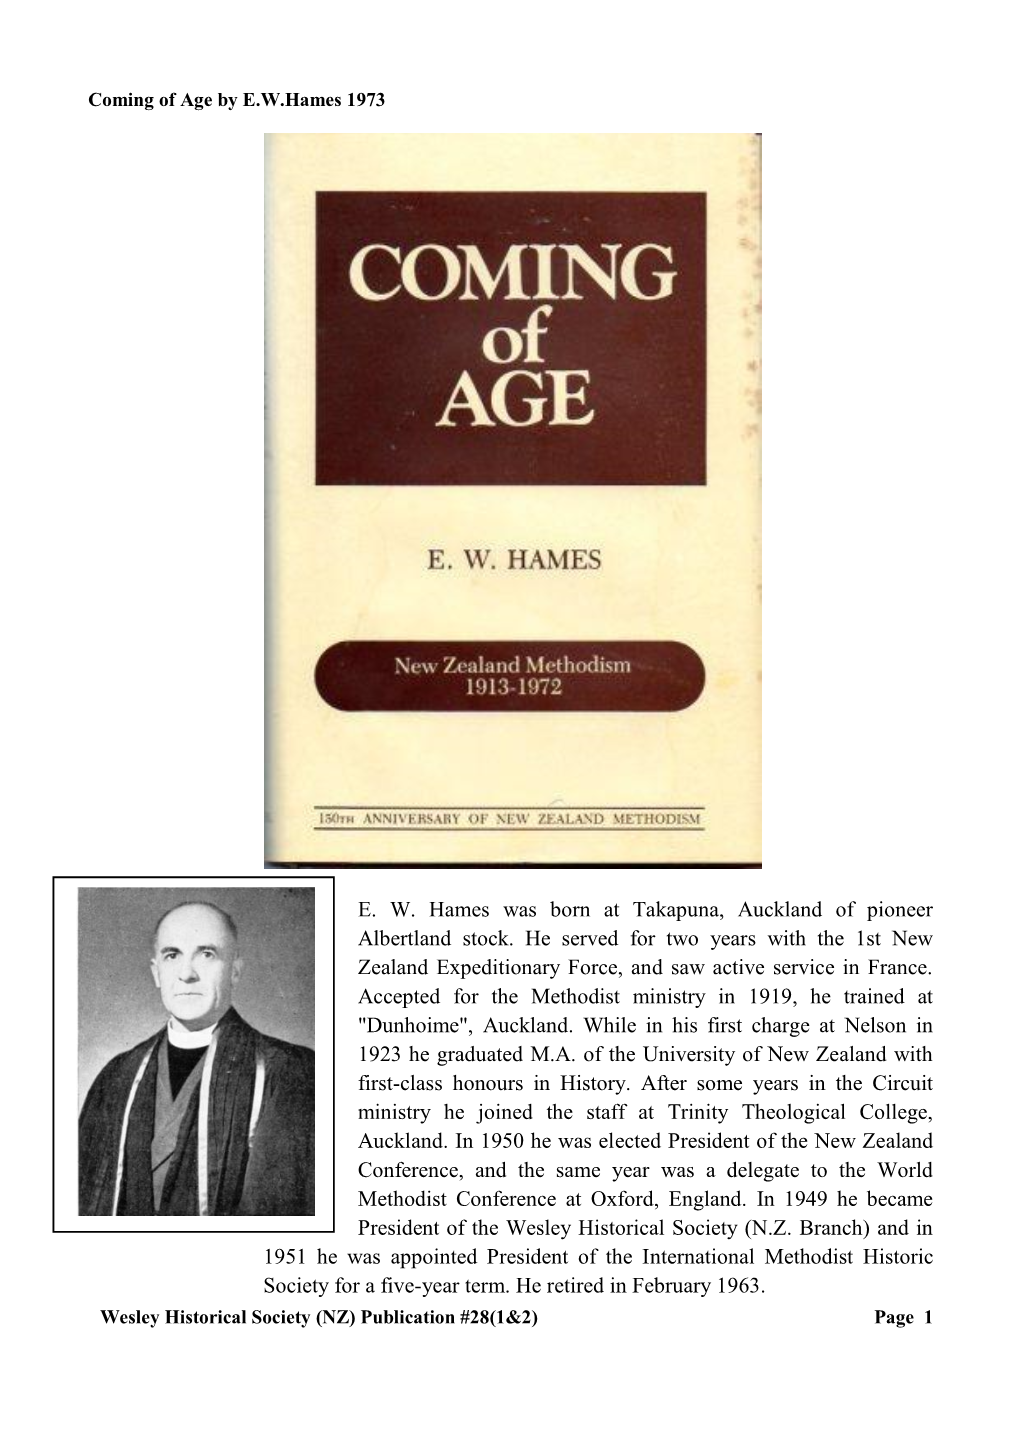 E. W. Hames Was Born at Takapuna, Auckland of Pioneer Albertland Stock